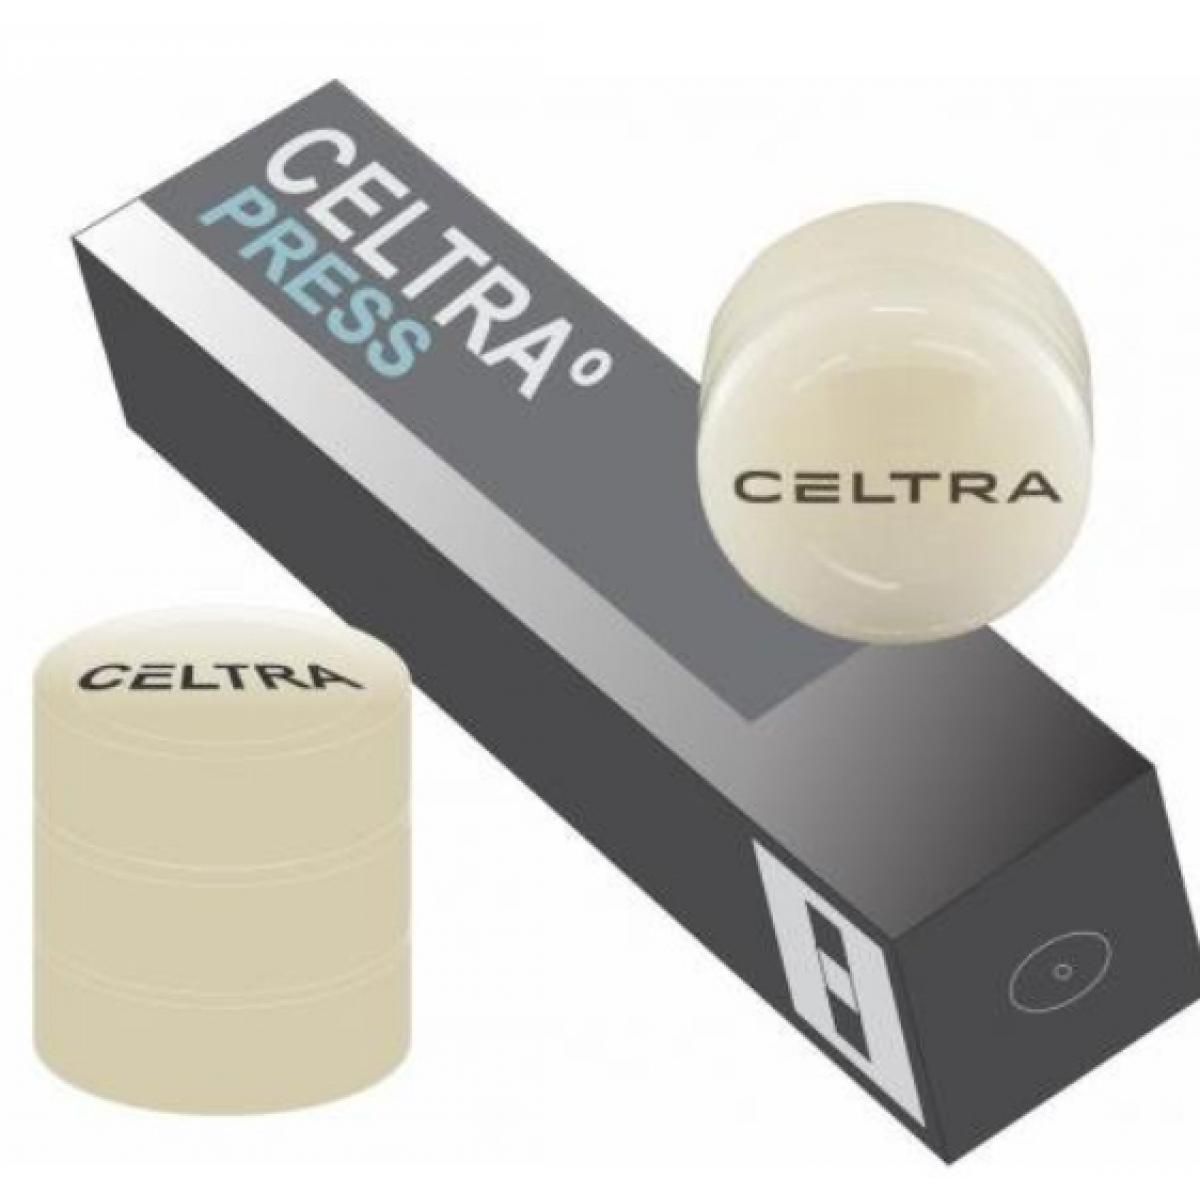 CELTRA PRESS LT C3 5 X 3 GR DENTSPLY -